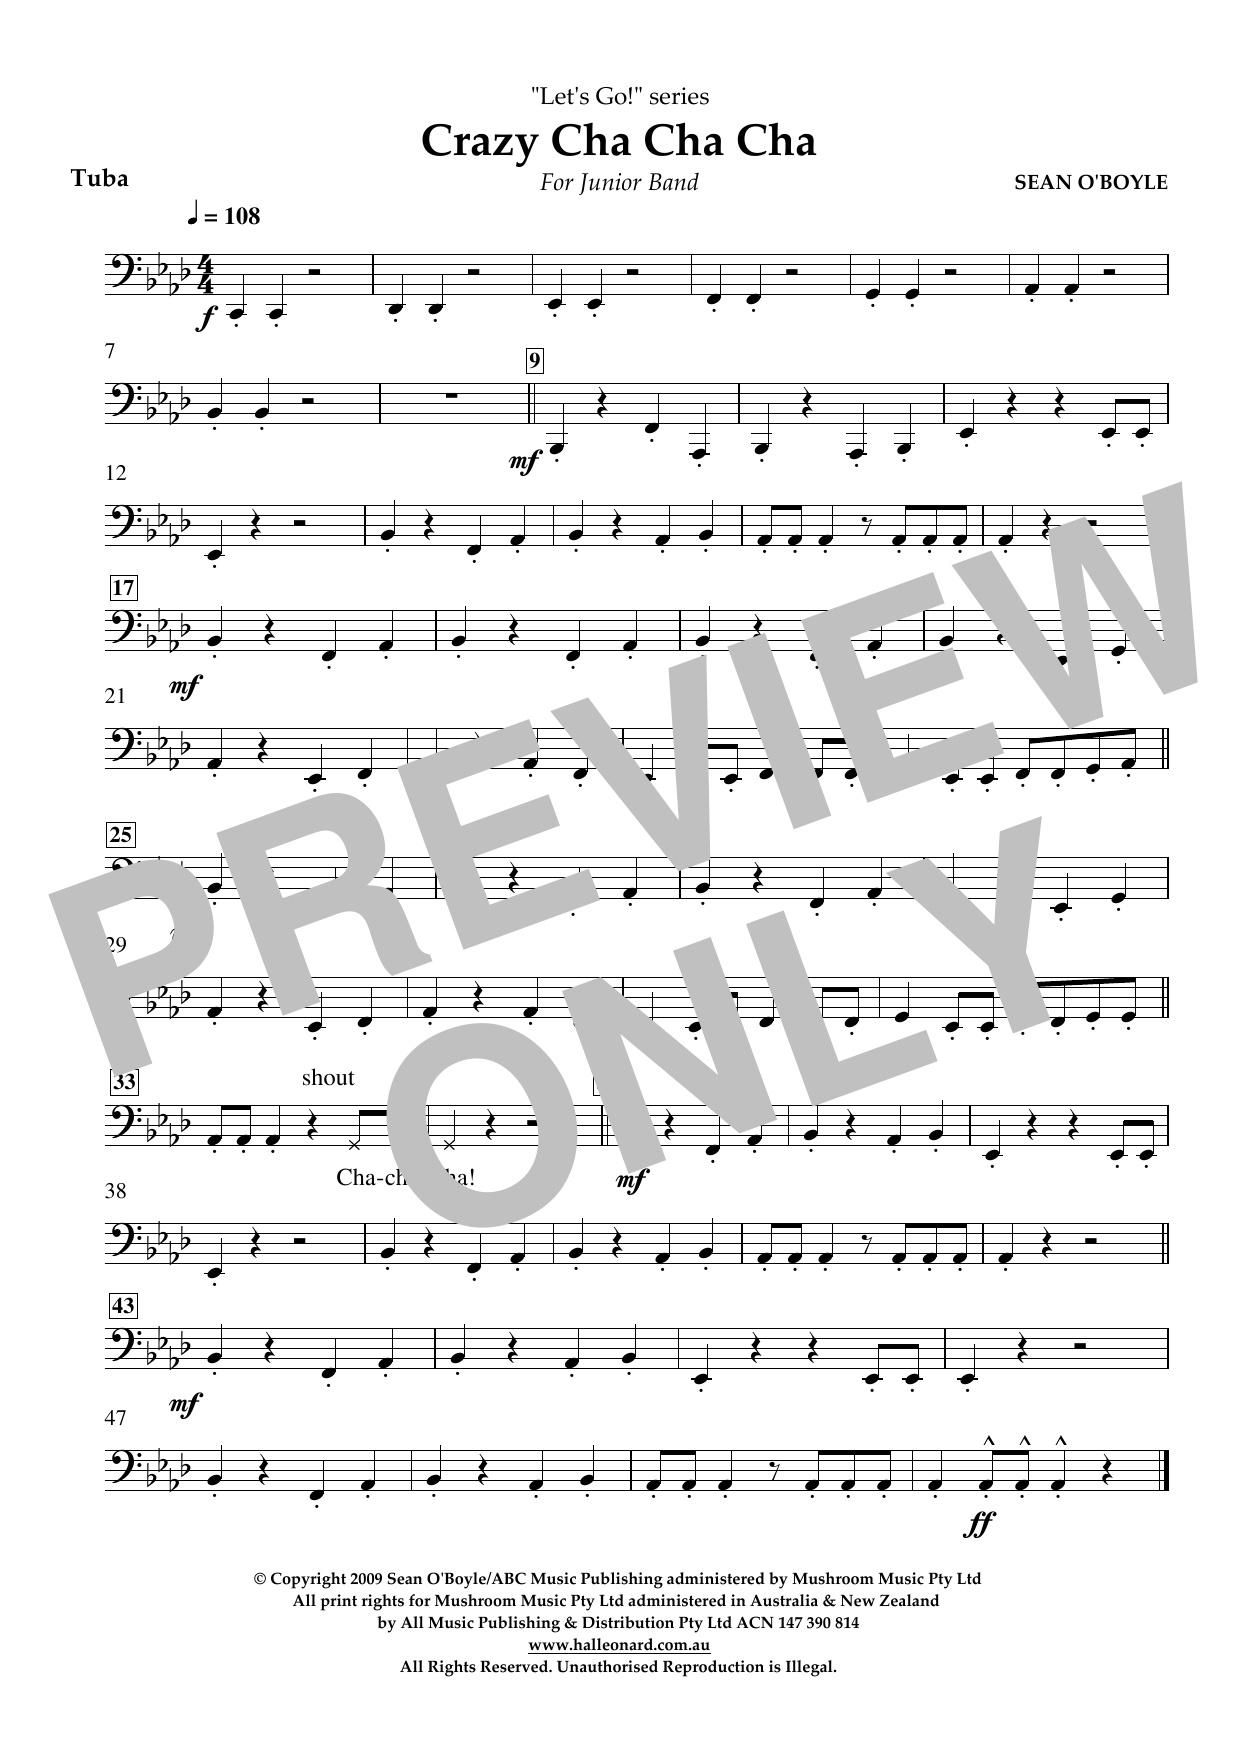 Sean O'Boyle Crazy Cha Cha Cha - Tuba Sheet Music Notes & Chords for Concert Band - Download or Print PDF